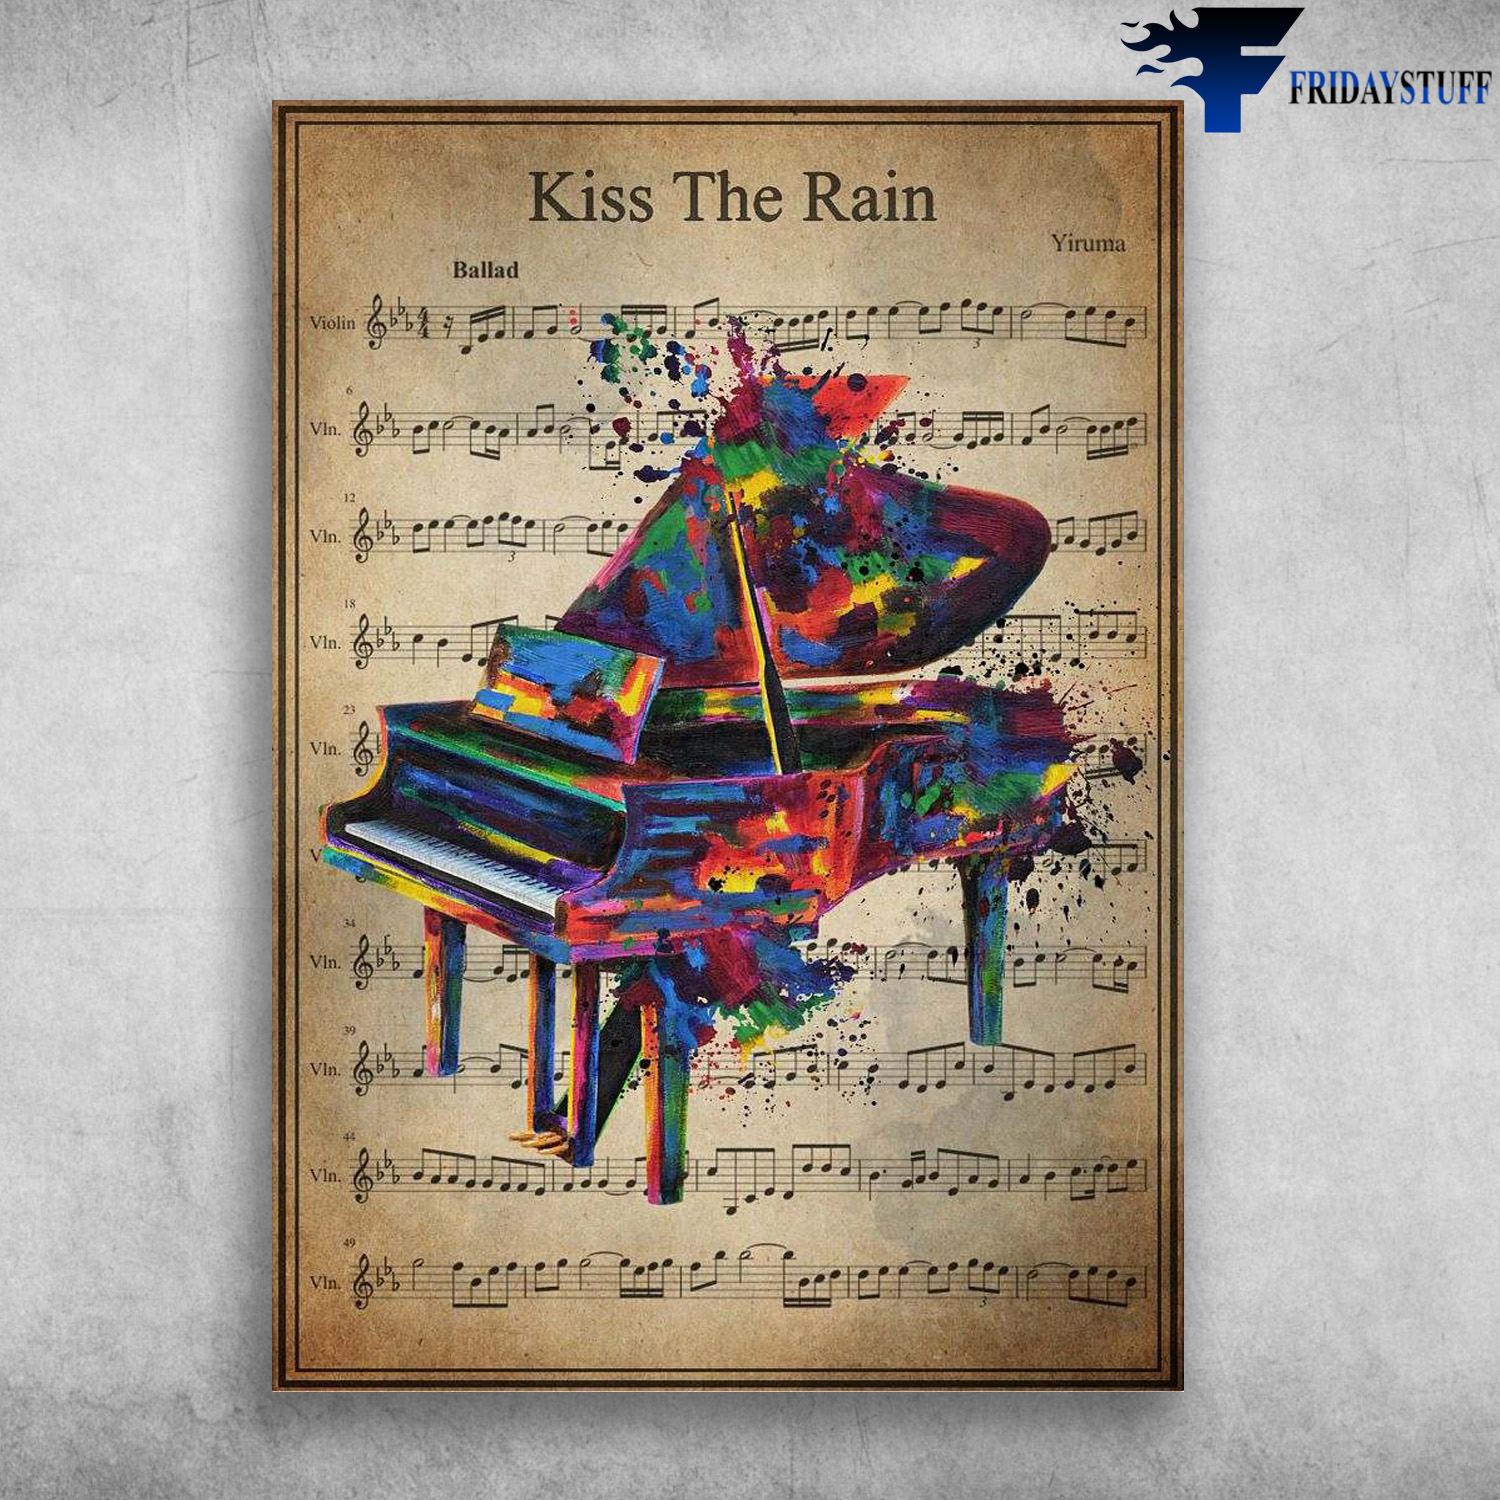 Piano Music Sheet - Kiss The Rain